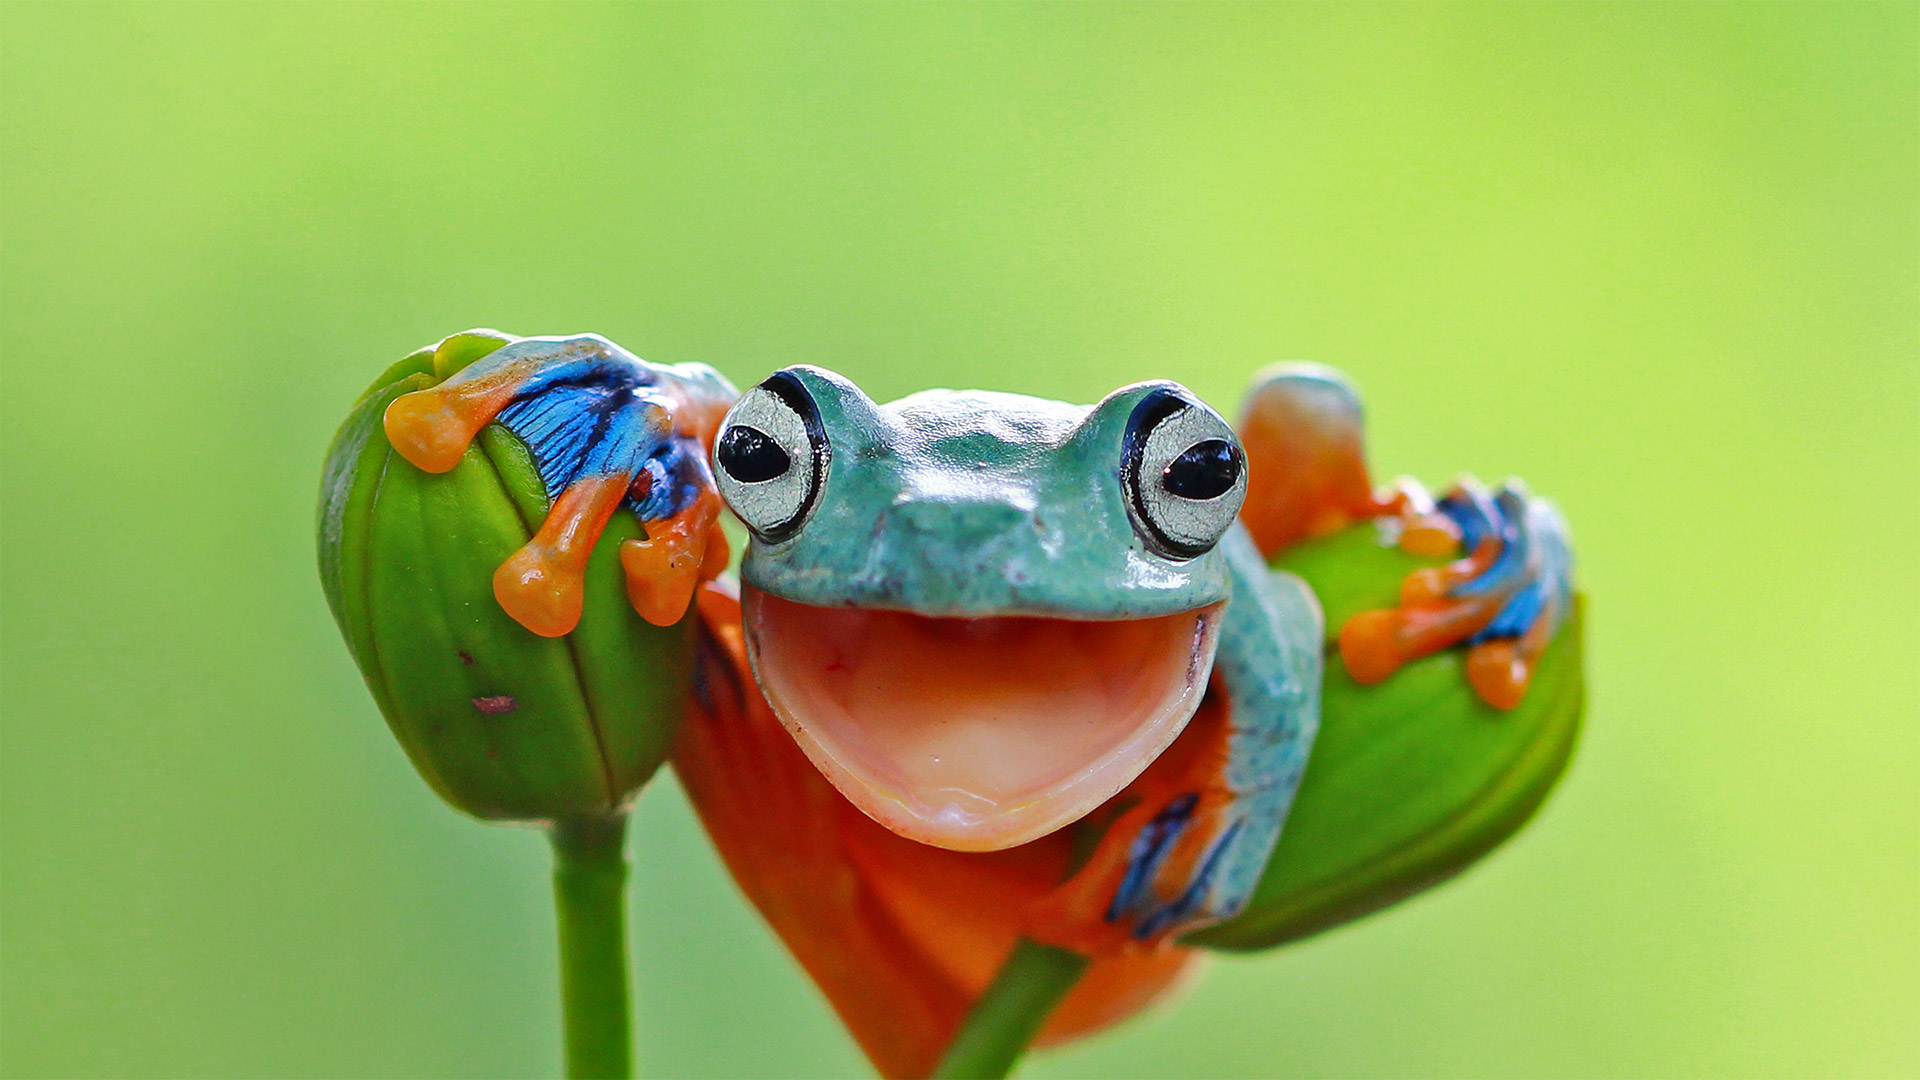 gifposter on World Frog Day httpstcoY19rdjOVXj